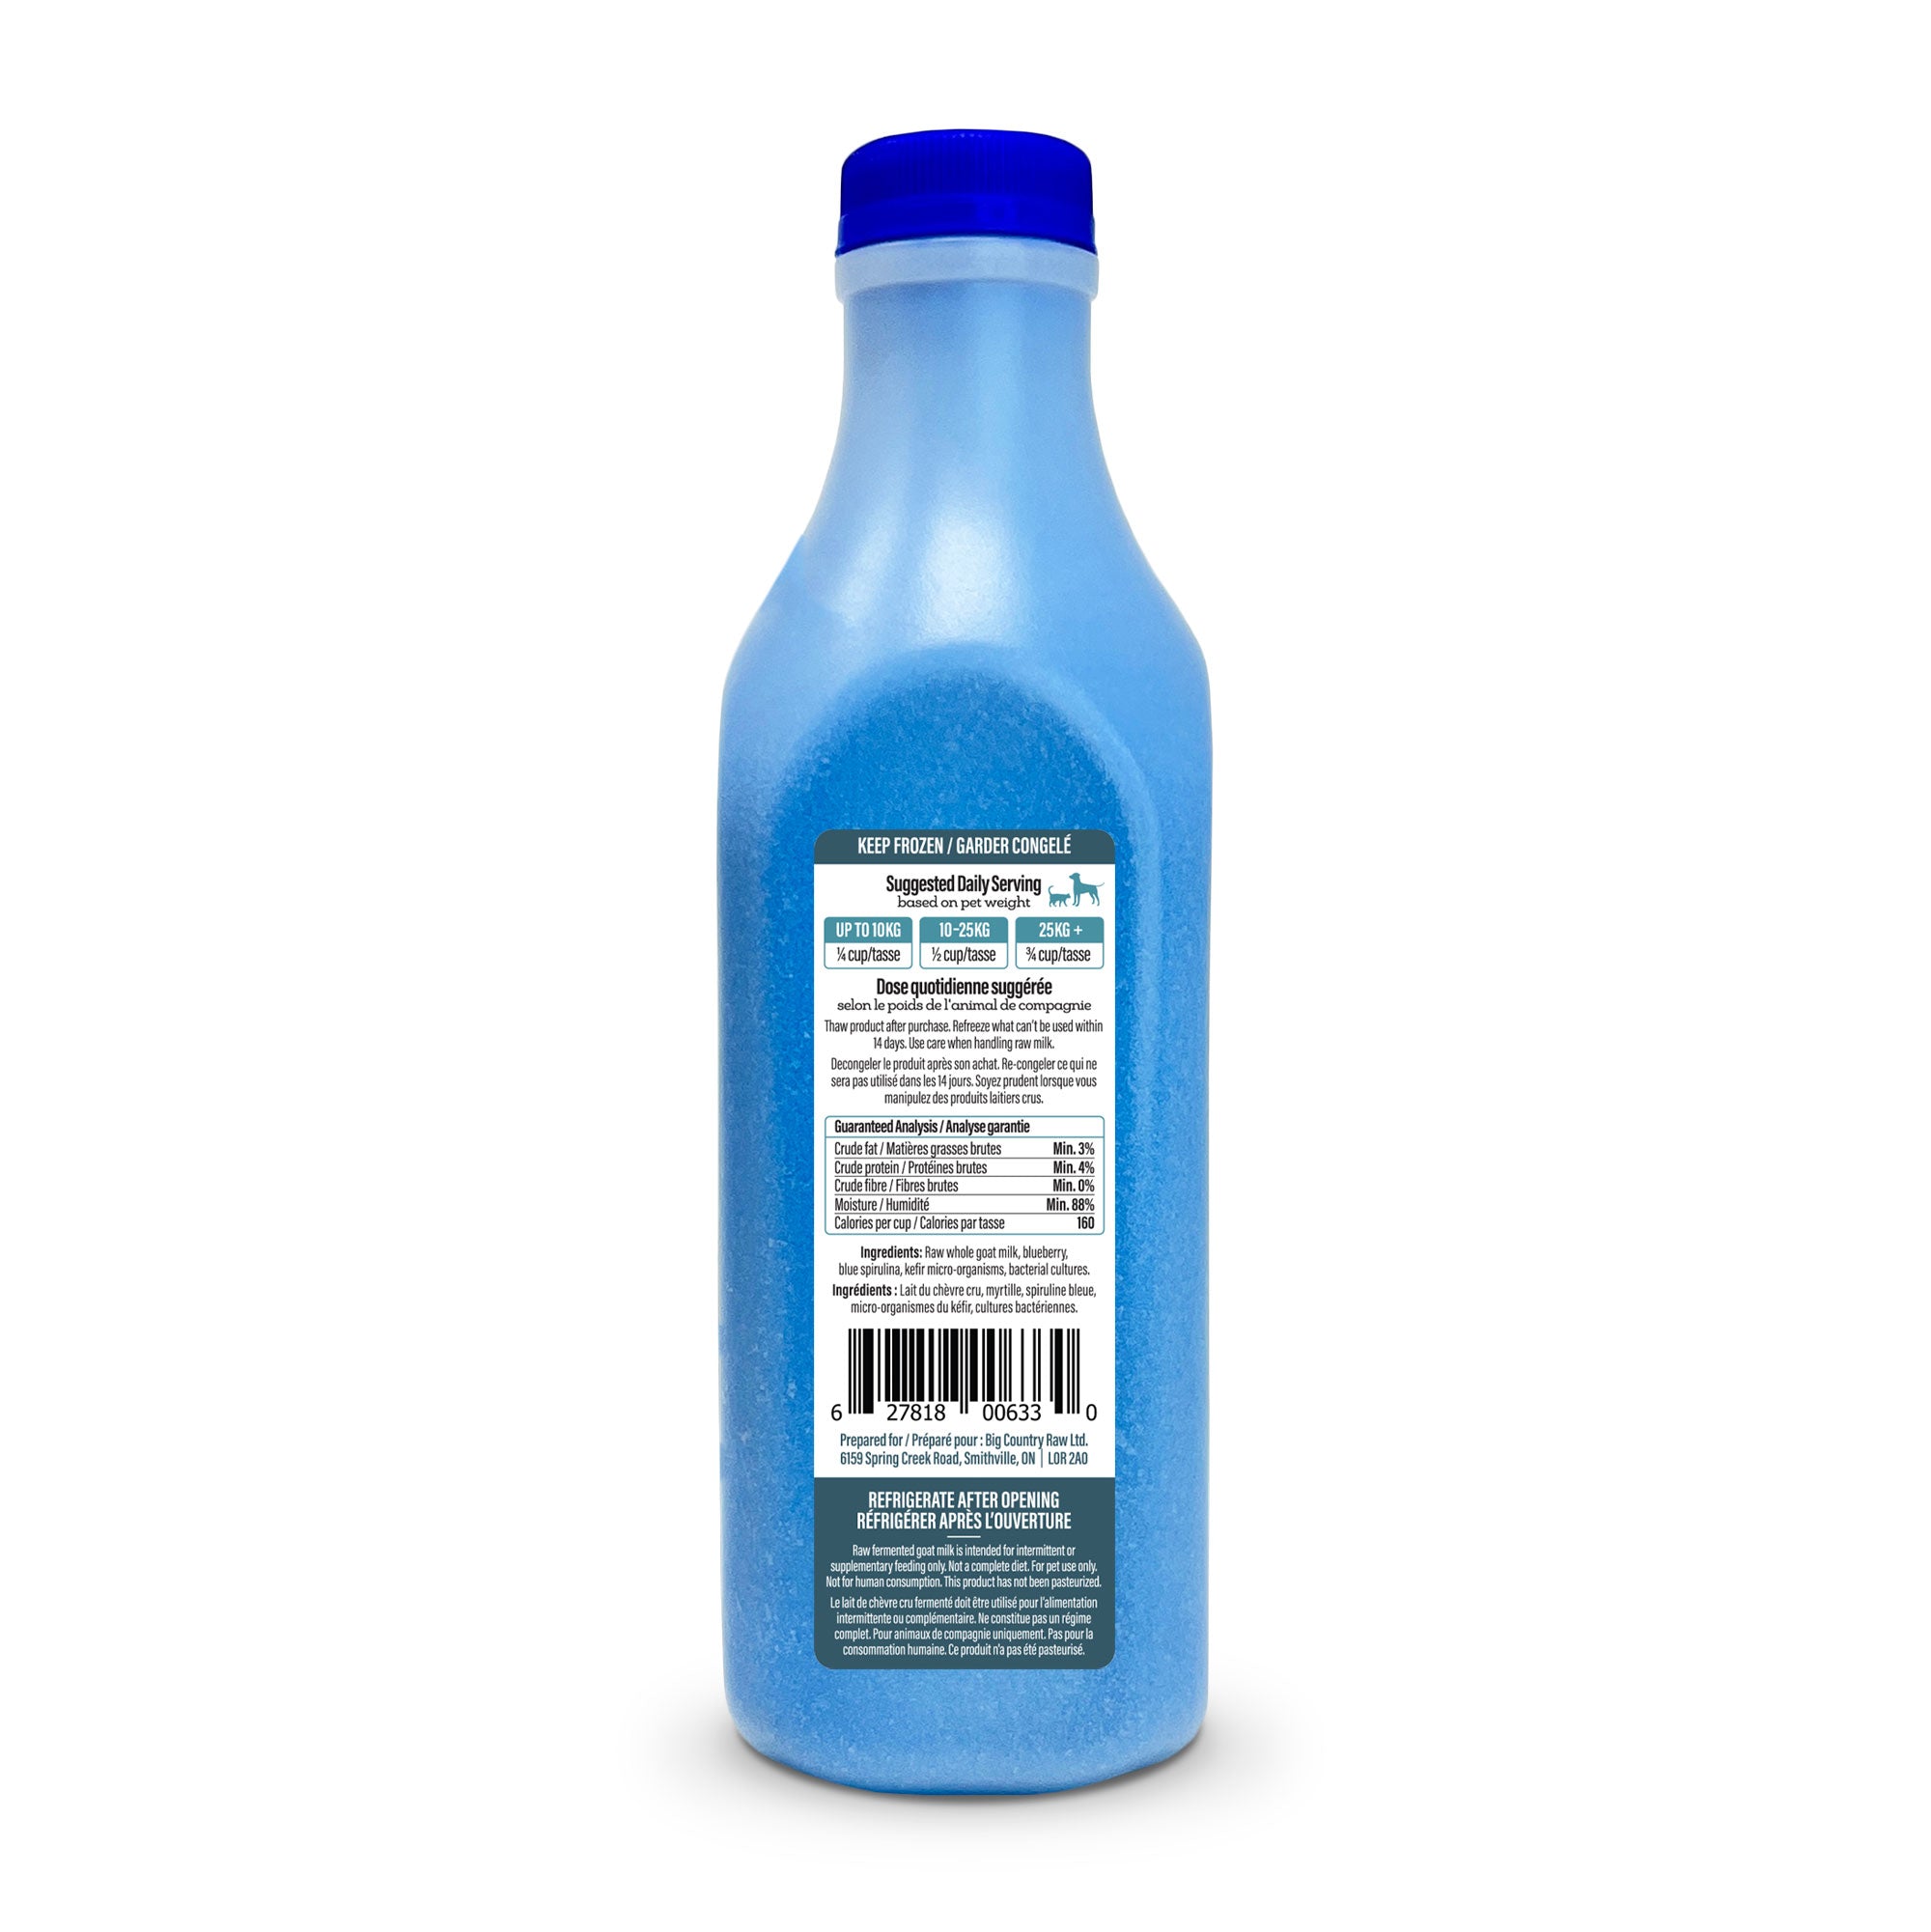 Raw Fermented Goat Milk Antioxidants (Blue) – 975 mL